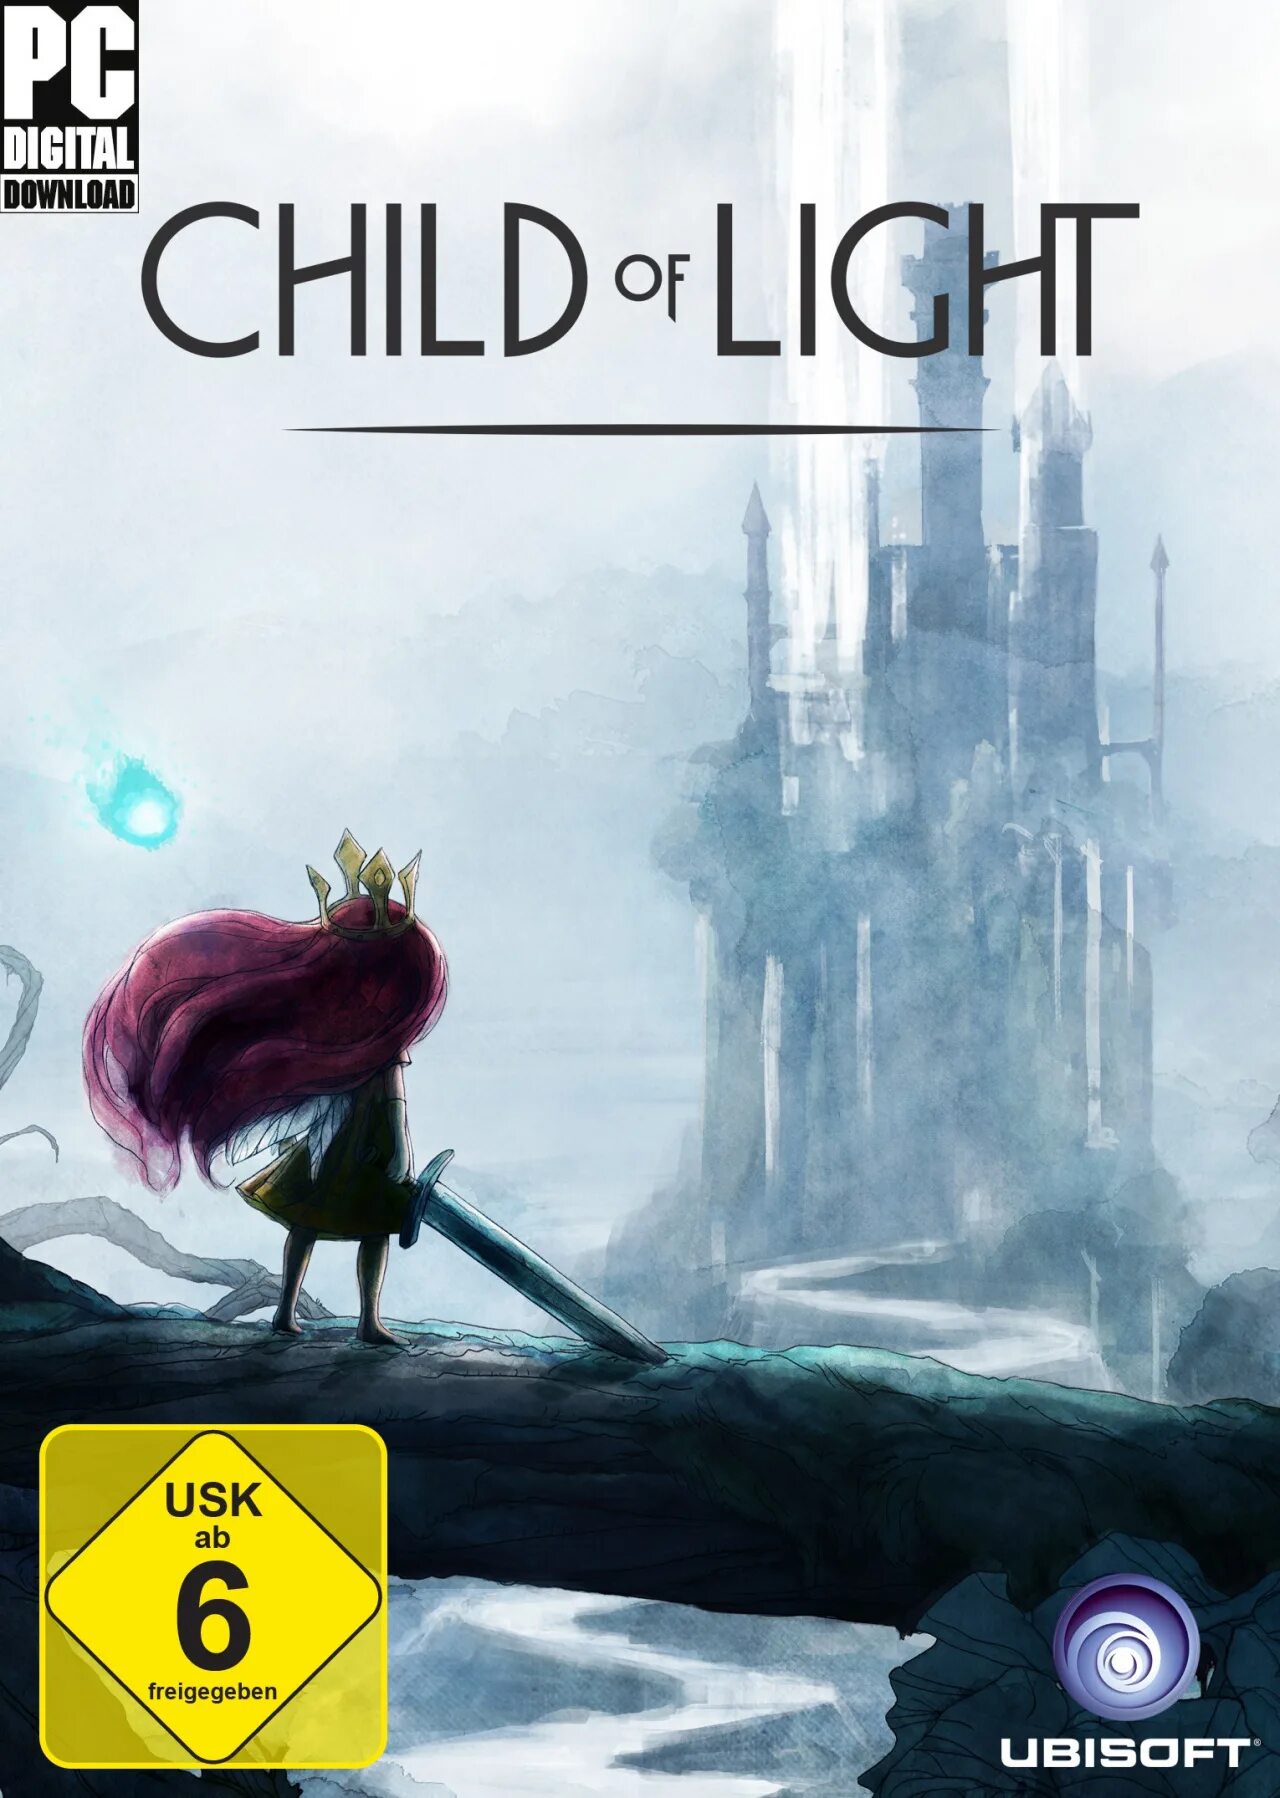 Child of Light игра. Child of Light Джен. Child of Light Xbox 360 обложка. Child of Light голем.